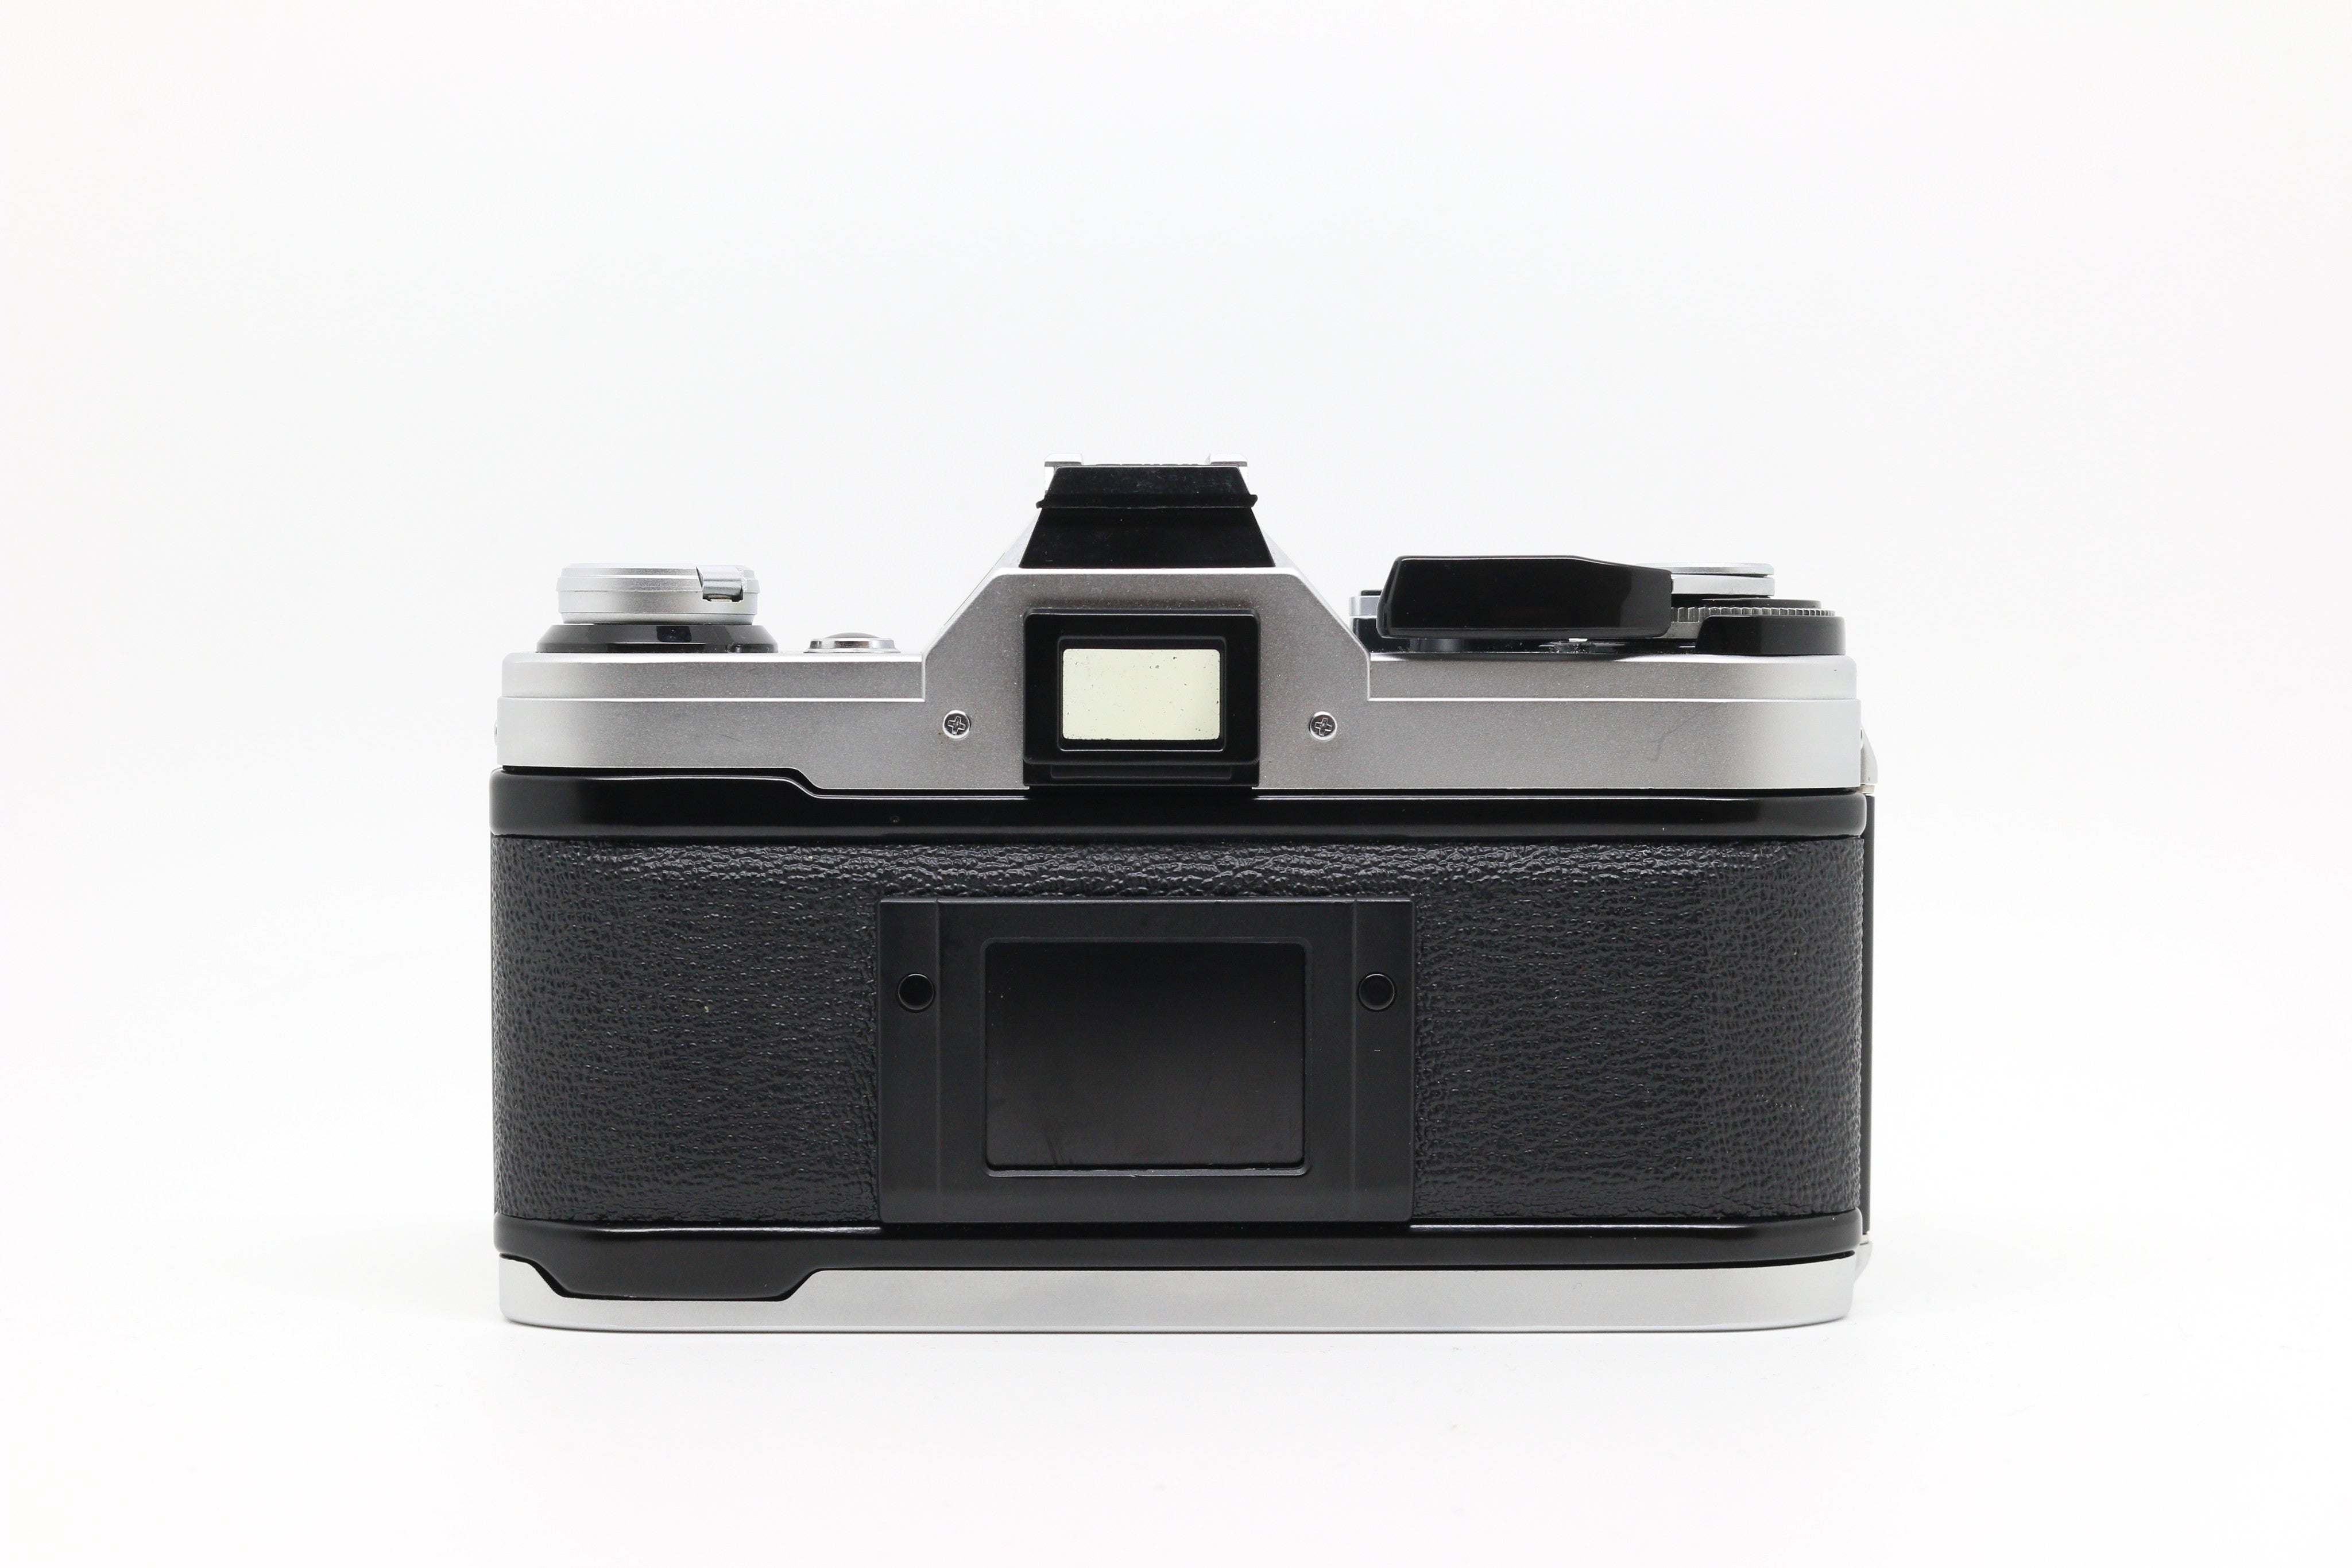 Canon AE1 & 50mm 1.8 FD Lens